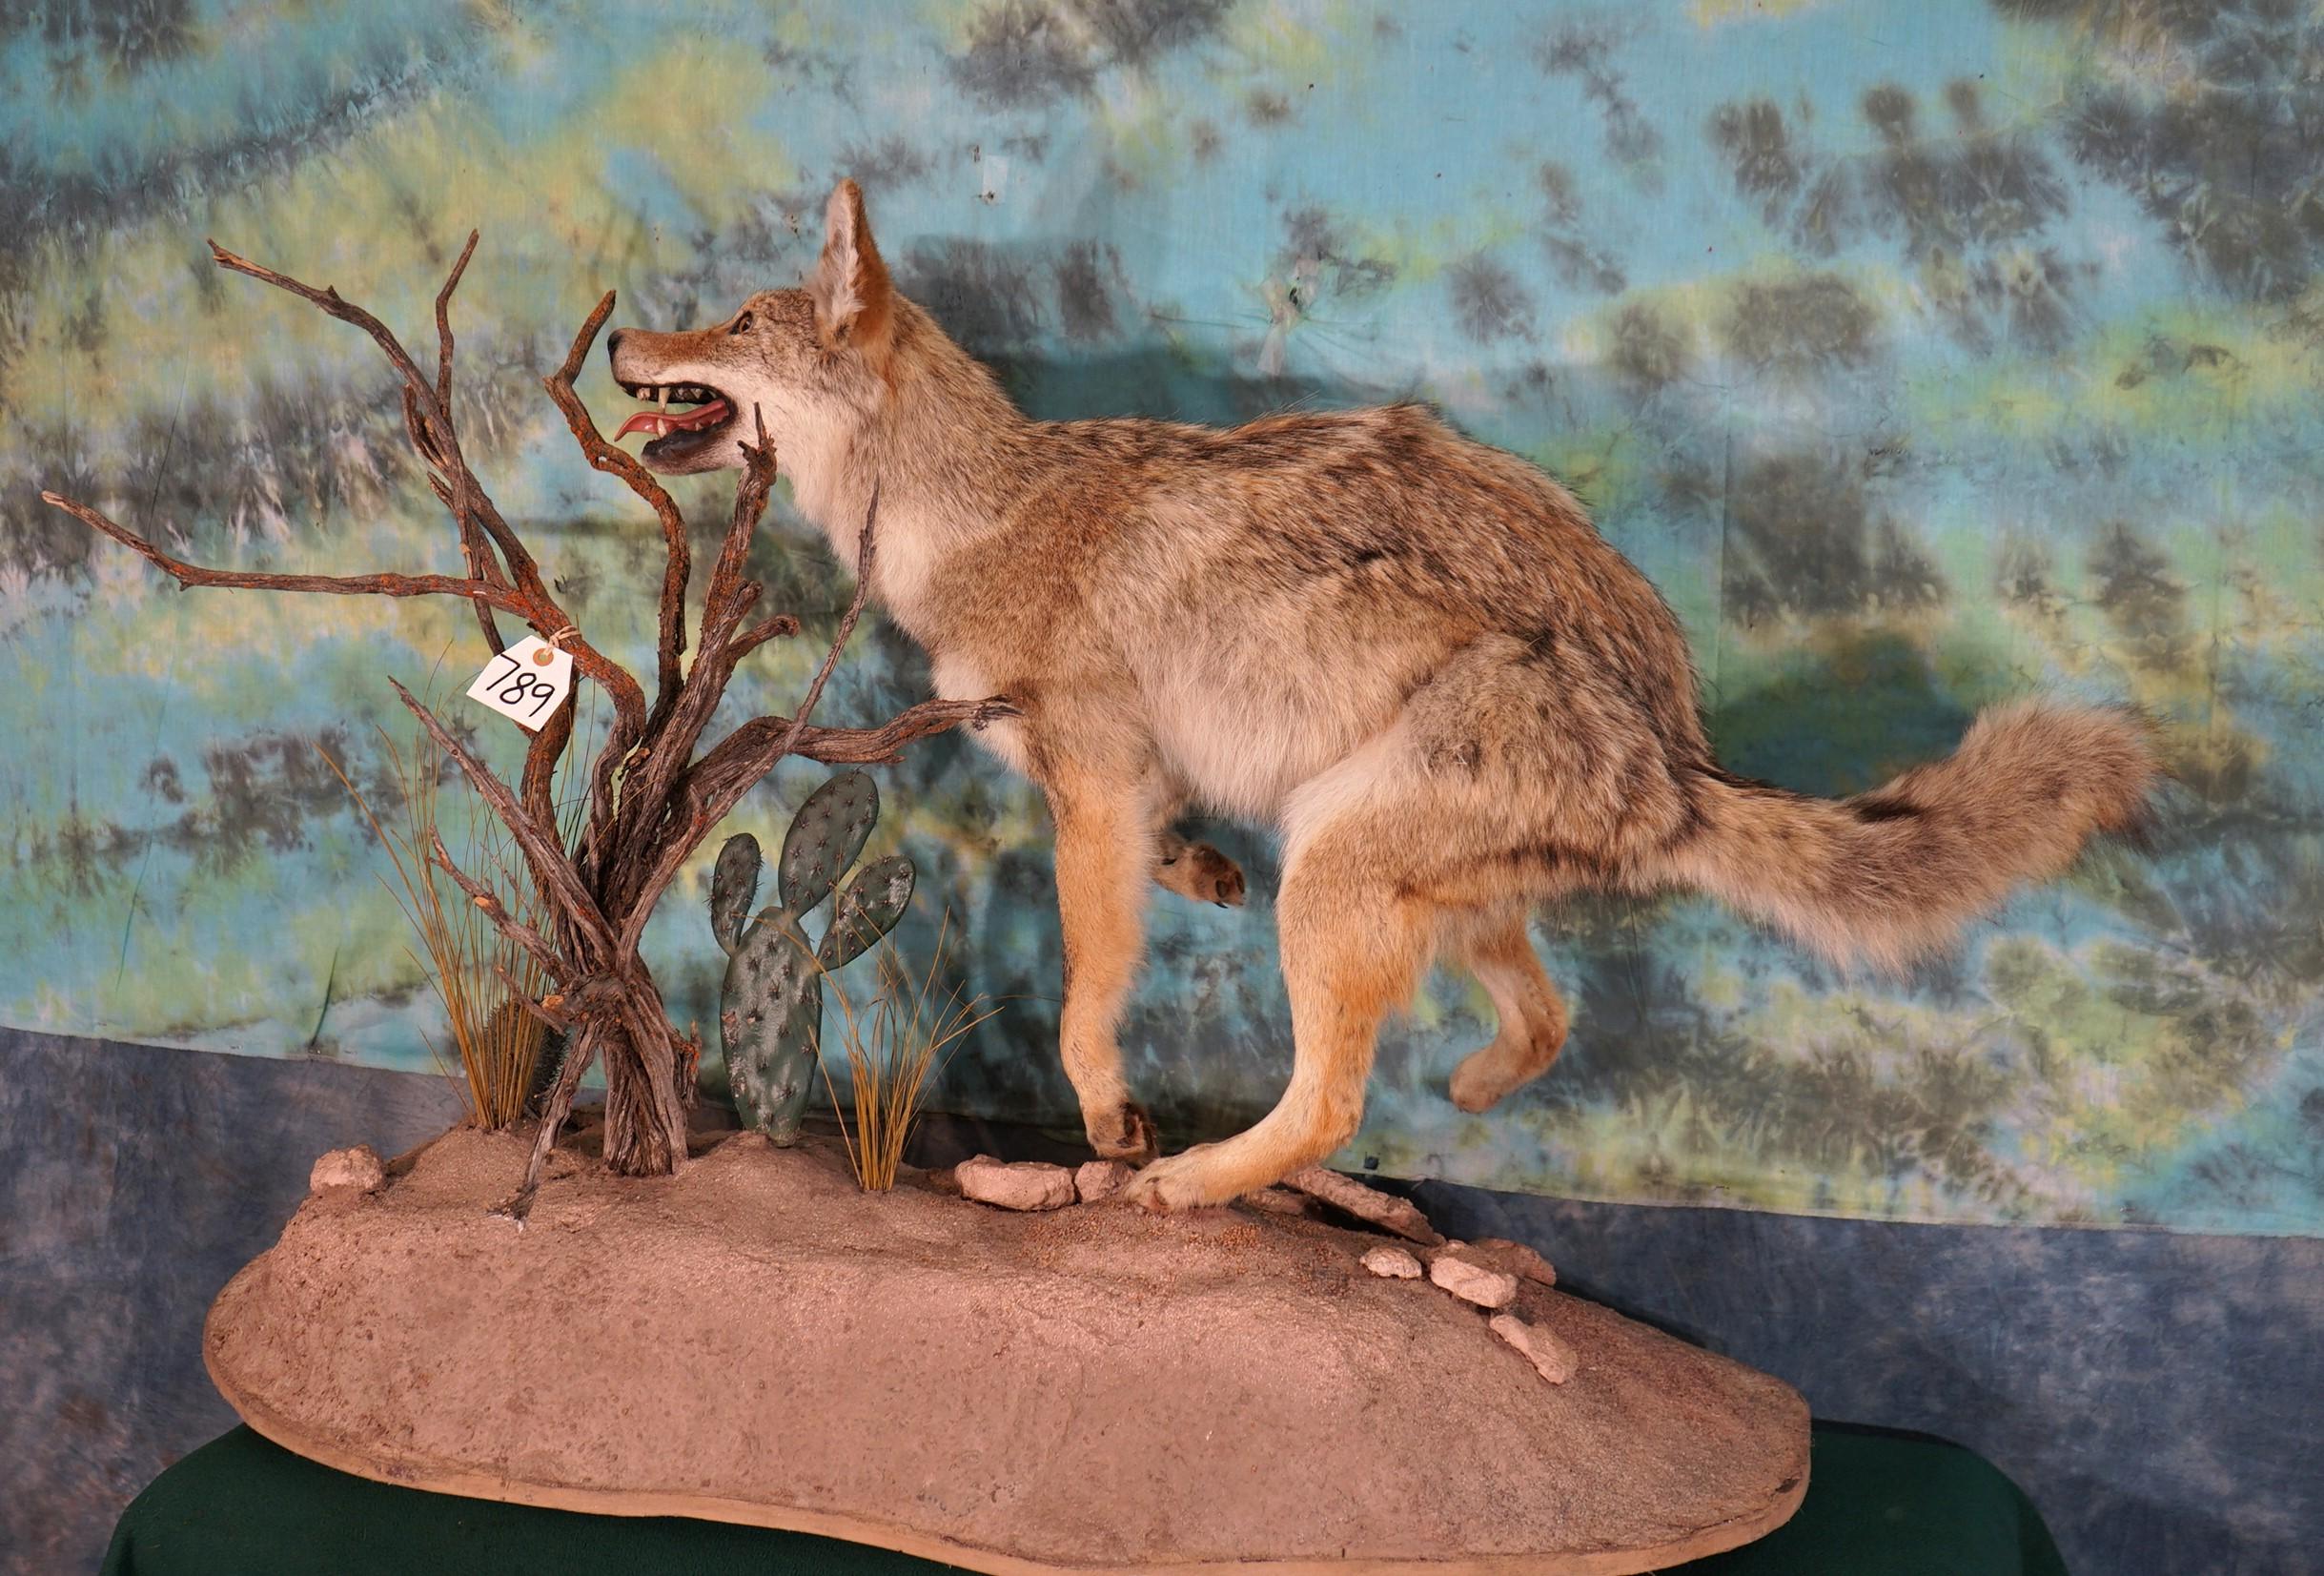 Coyote in Habitat Full Body Taxidermy Mount